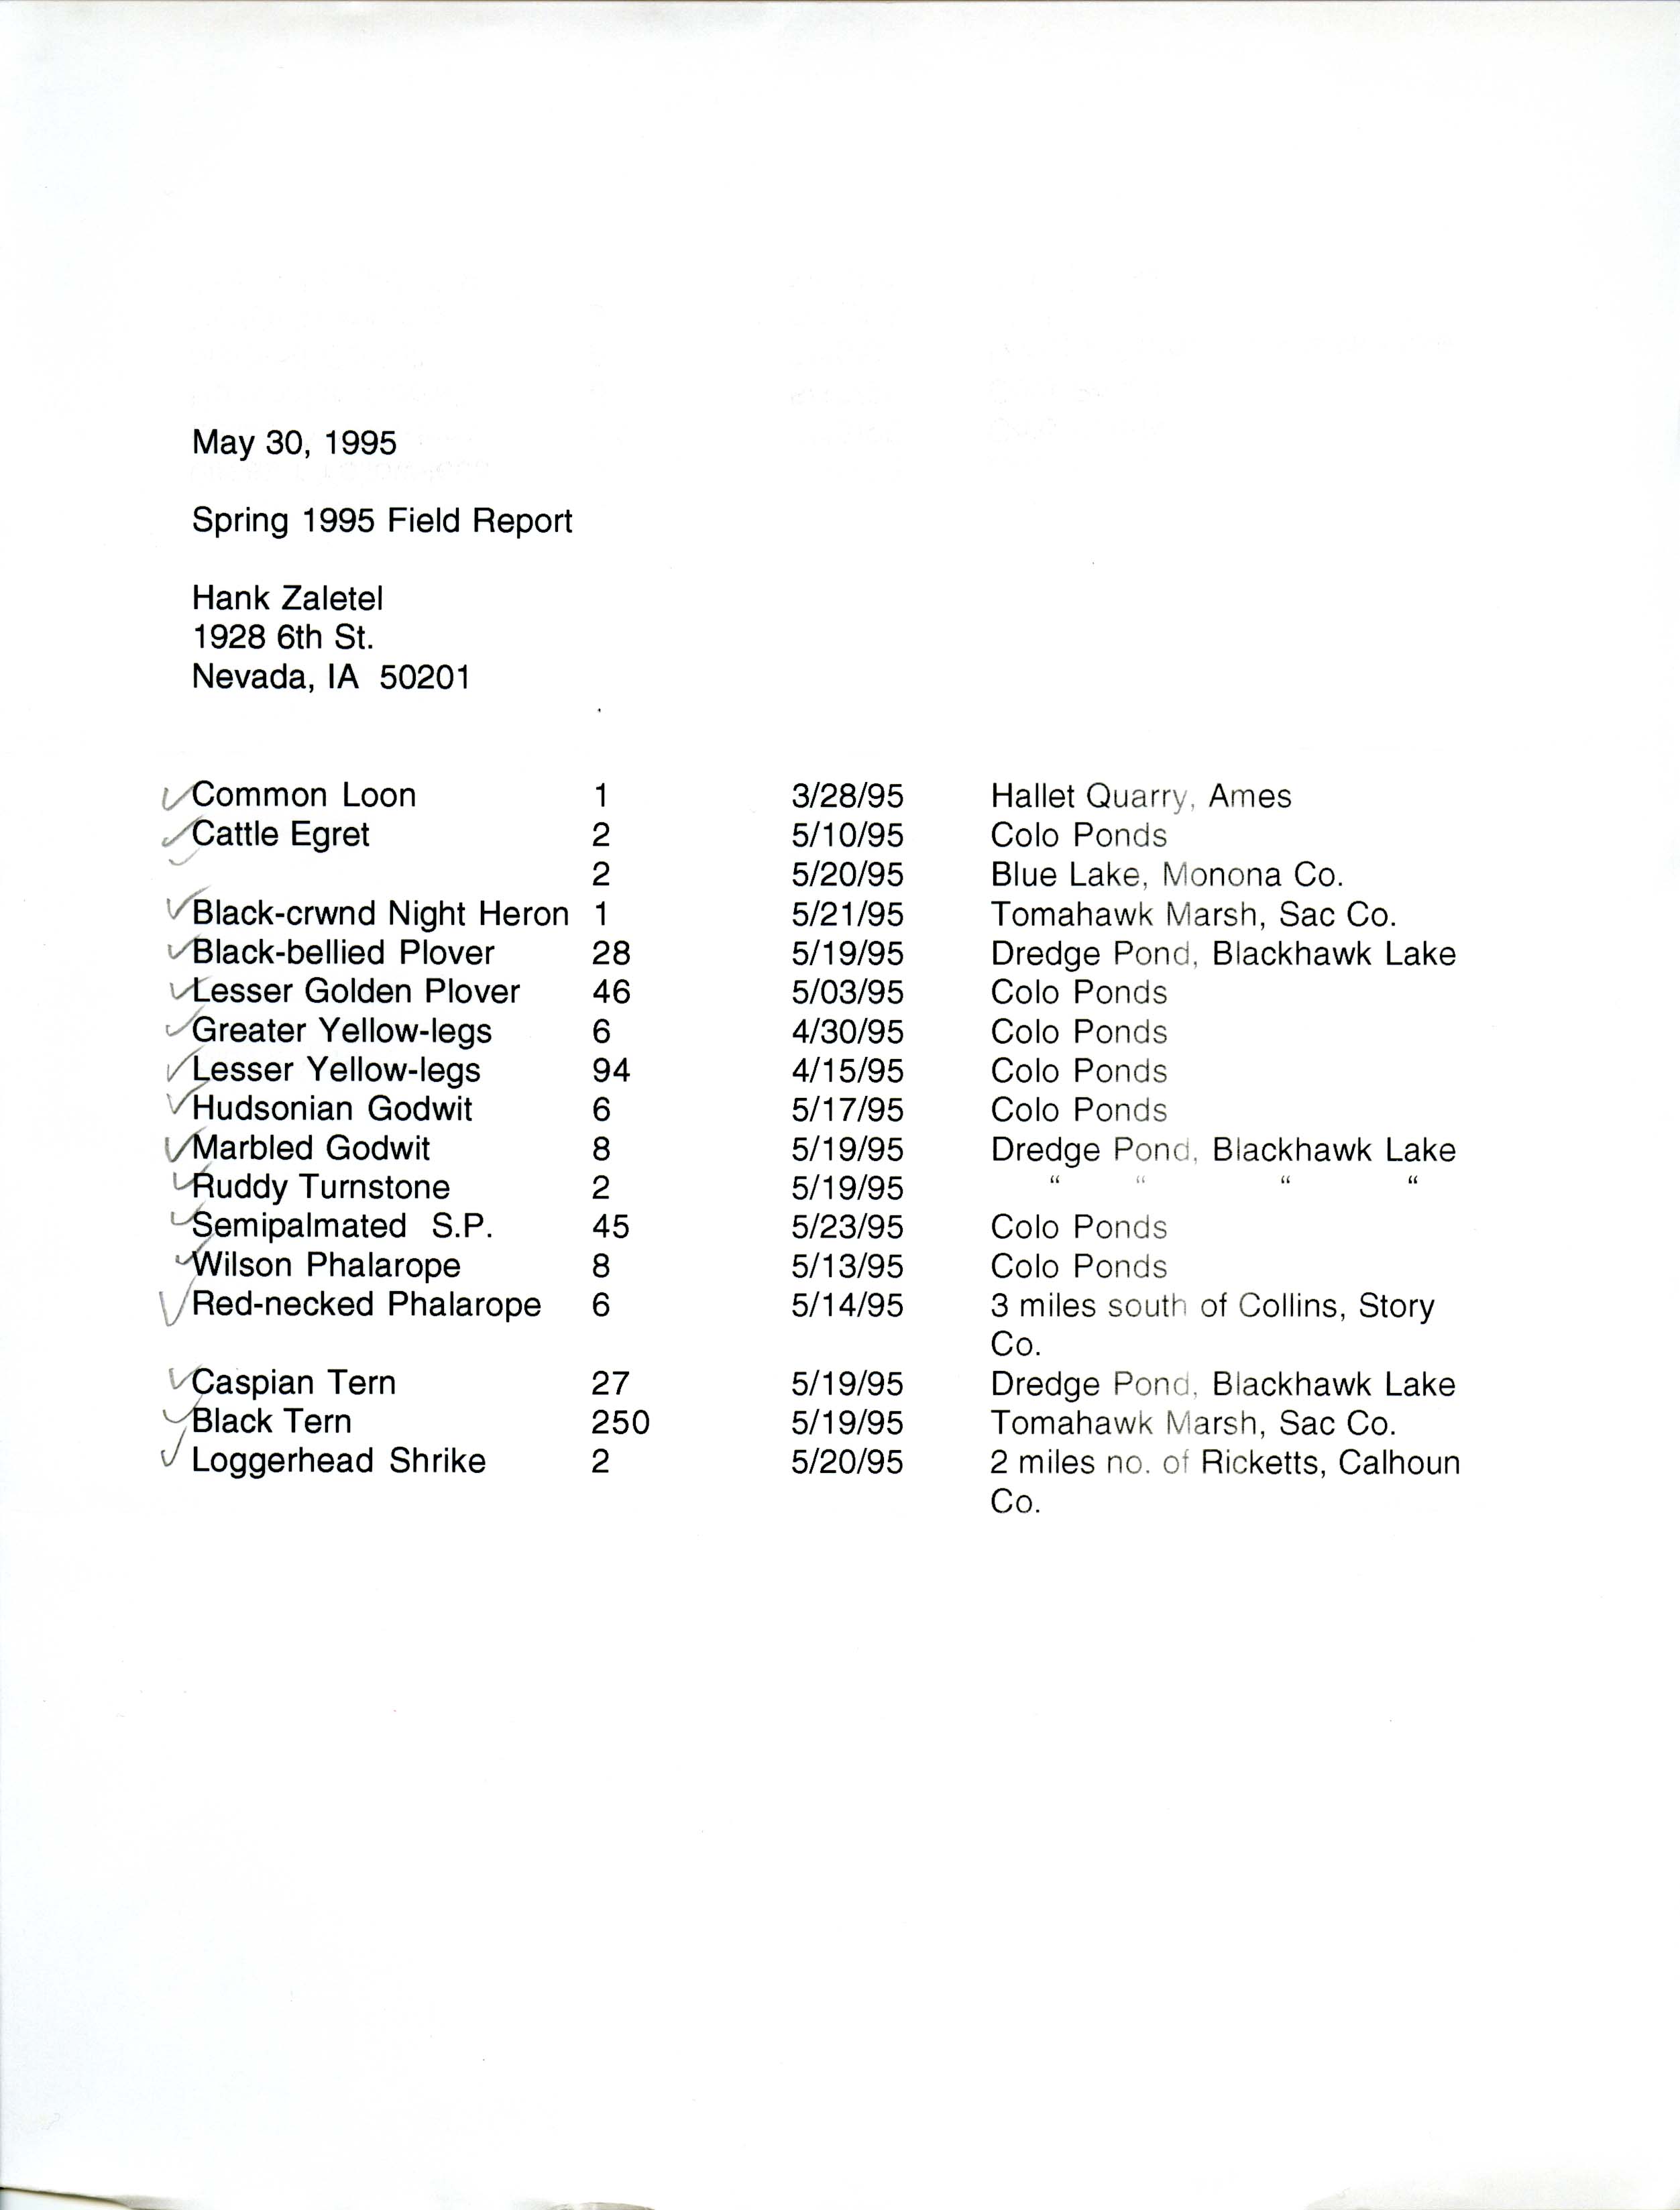 Spring 1995 field report, Hank Zaletel